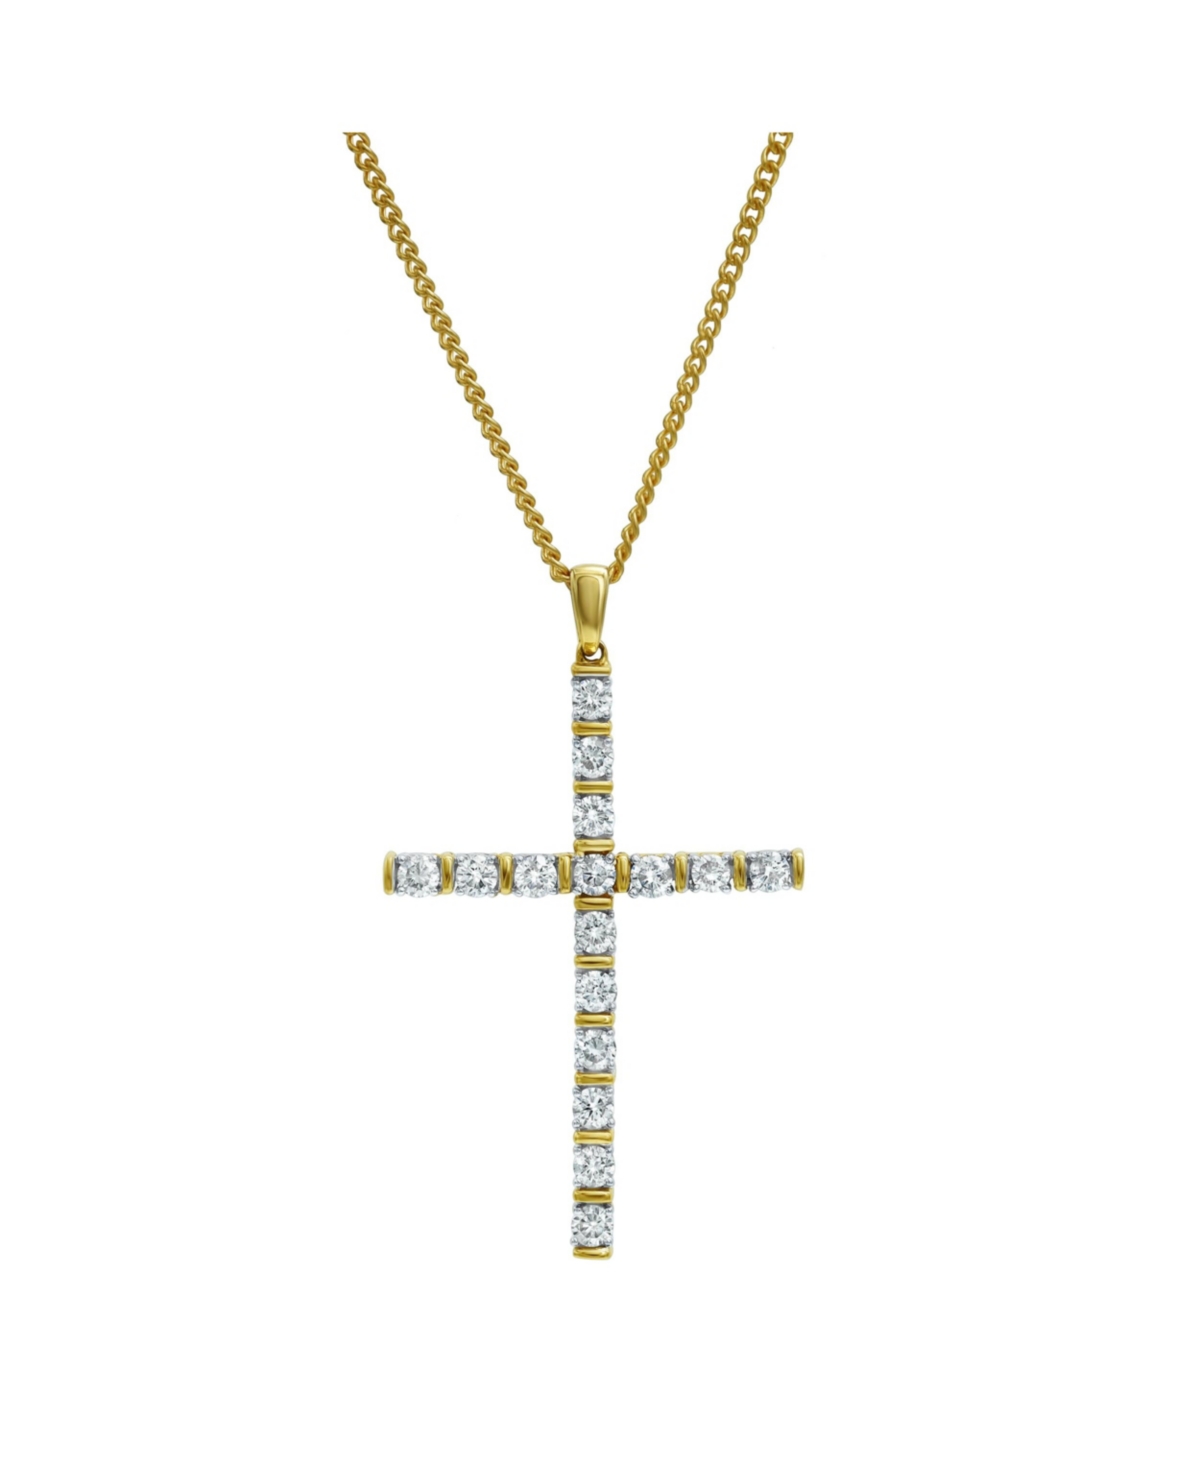 Kings Cross Ii Natural Round Cut Diamond Pendant (1.01 cttw) in 14k Yellow Gold for Women & Men - Yellow